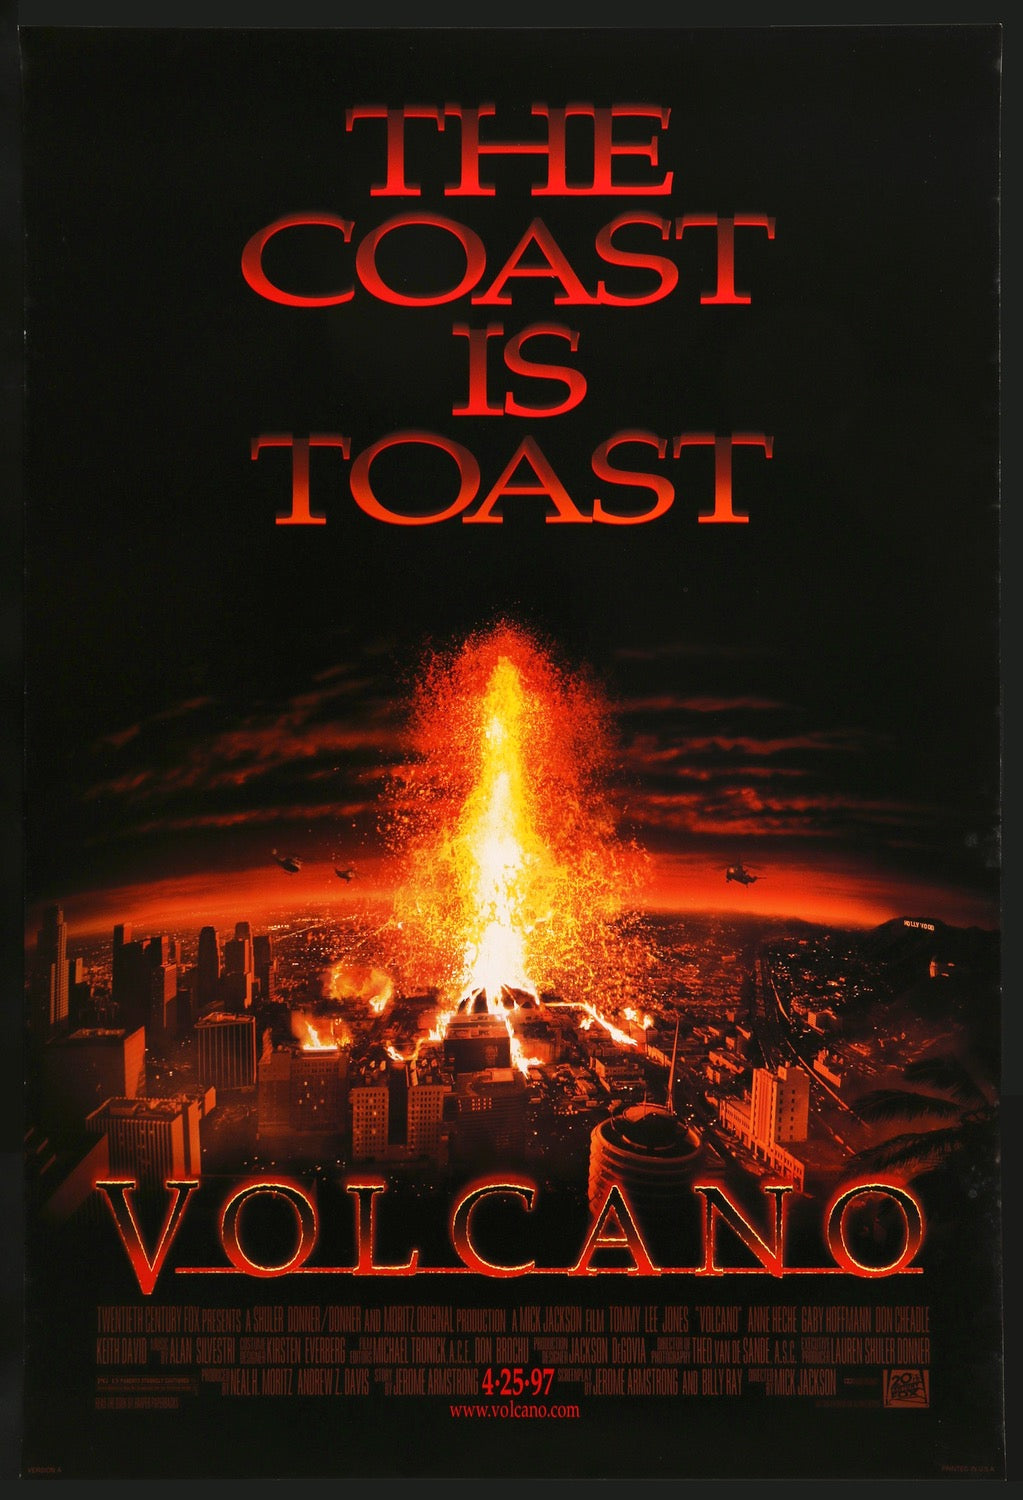 Volcano (1997) original movie poster for sale at Original Film Art